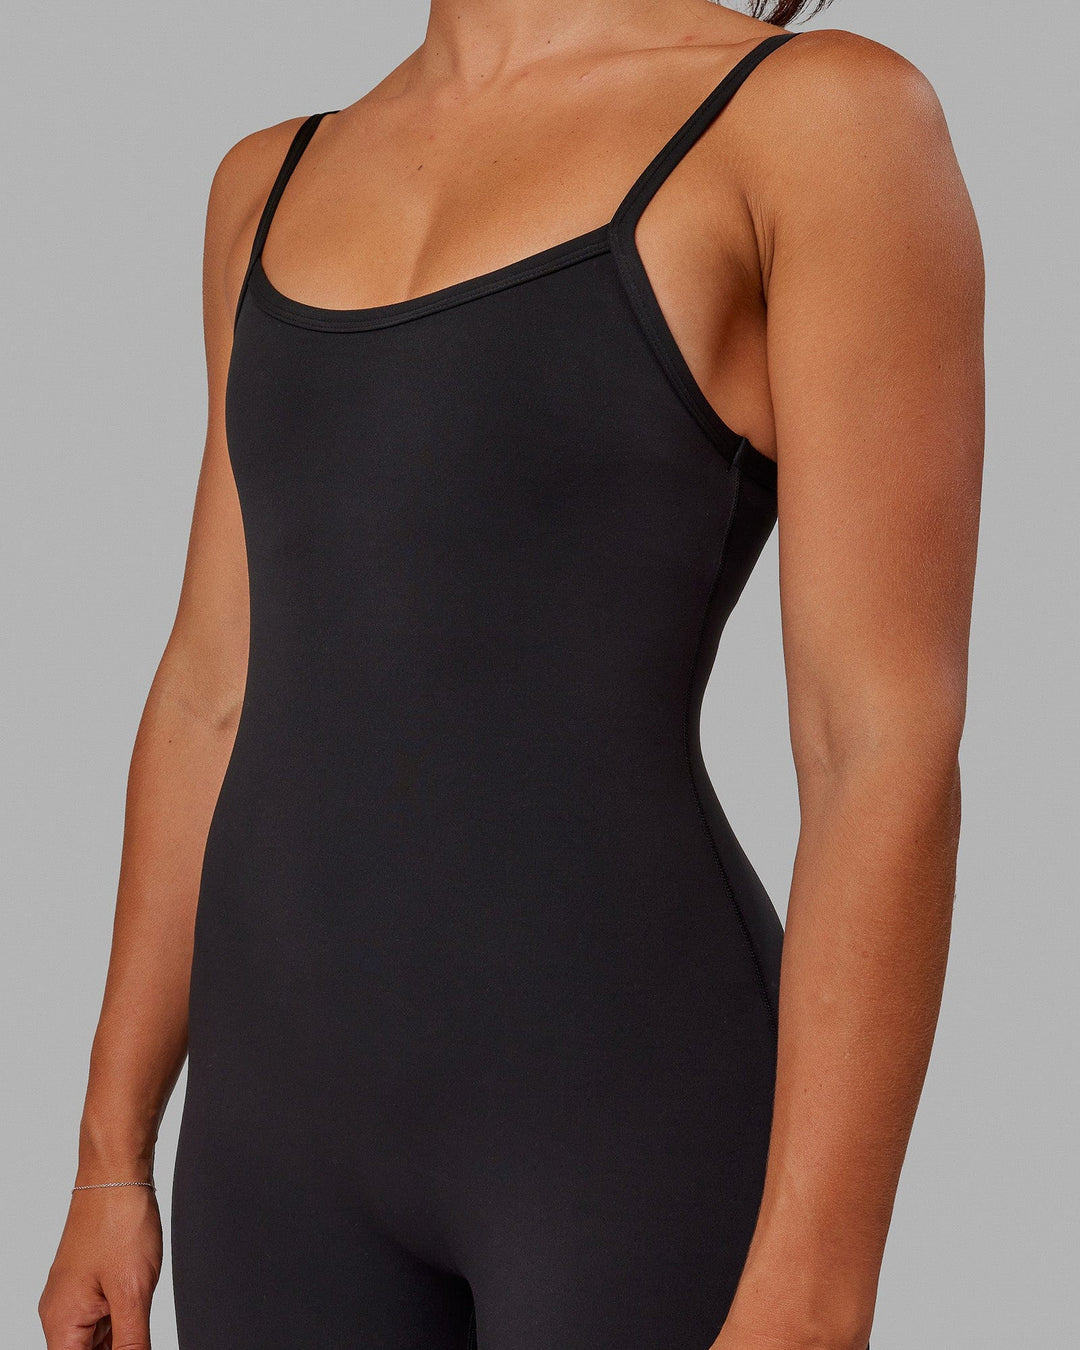 Woman wearing Clarity Full Length Bodysuit - Black